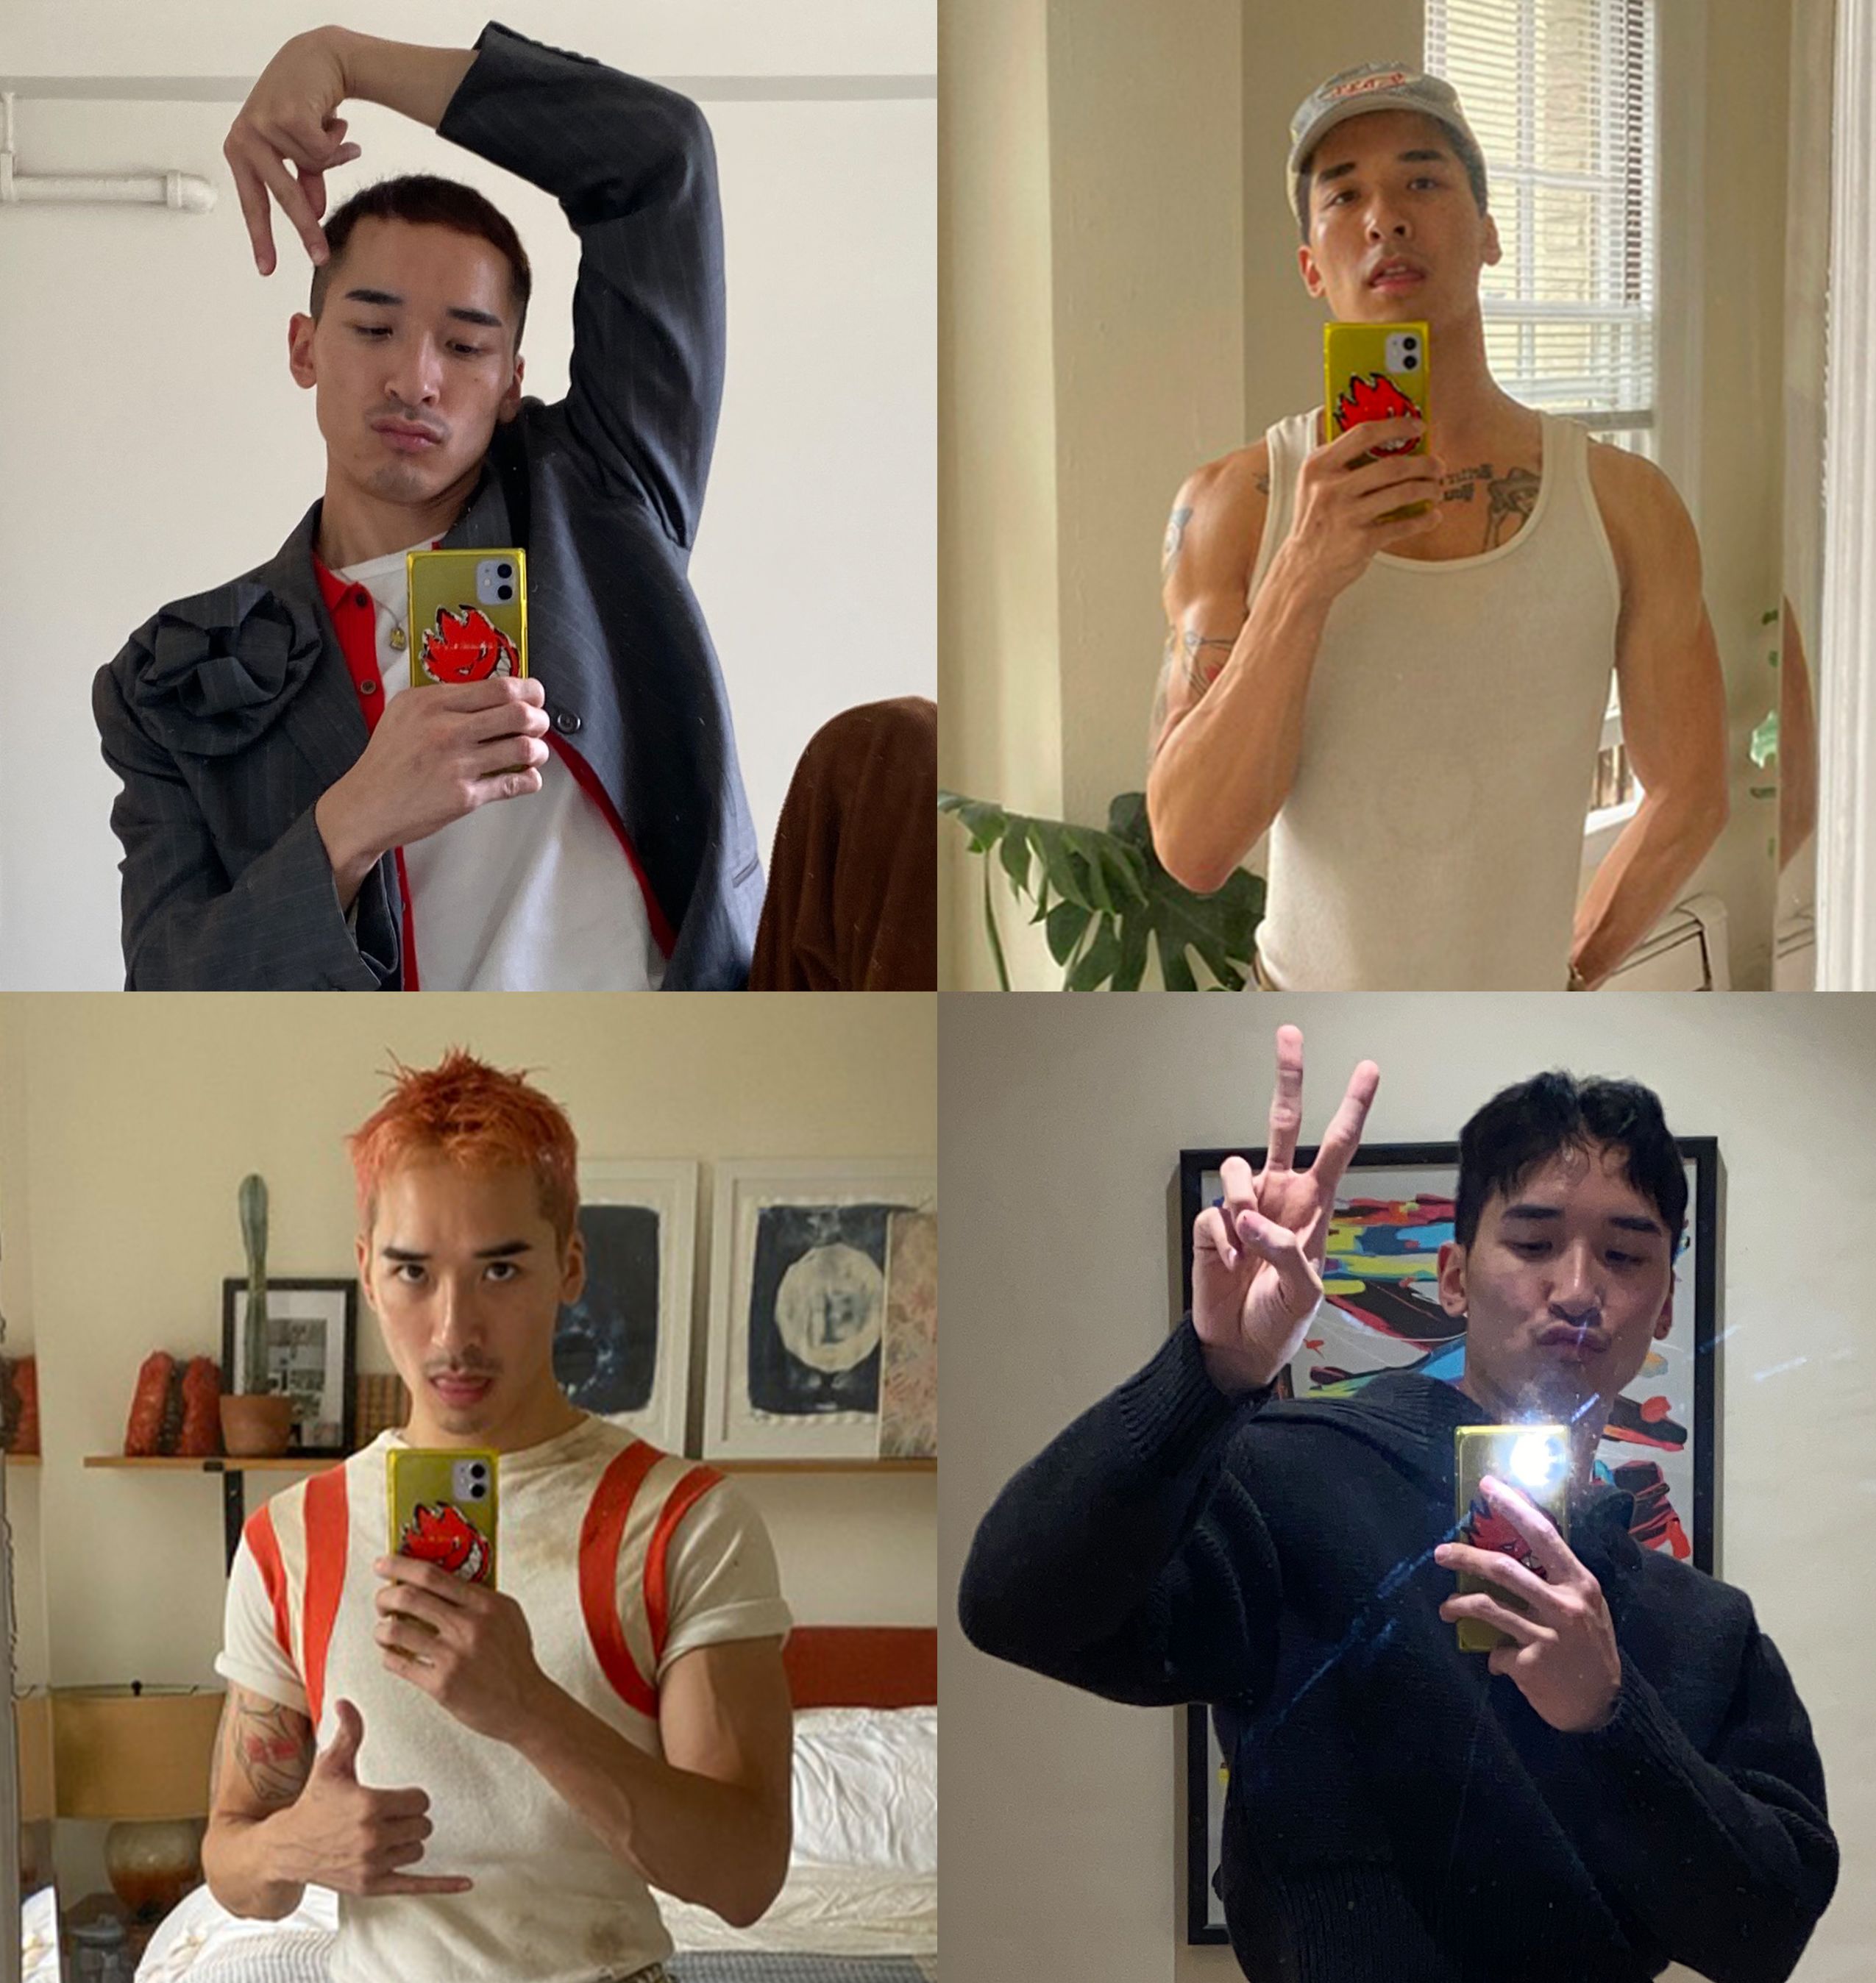 Four photos of an artist posing for mirror selfies